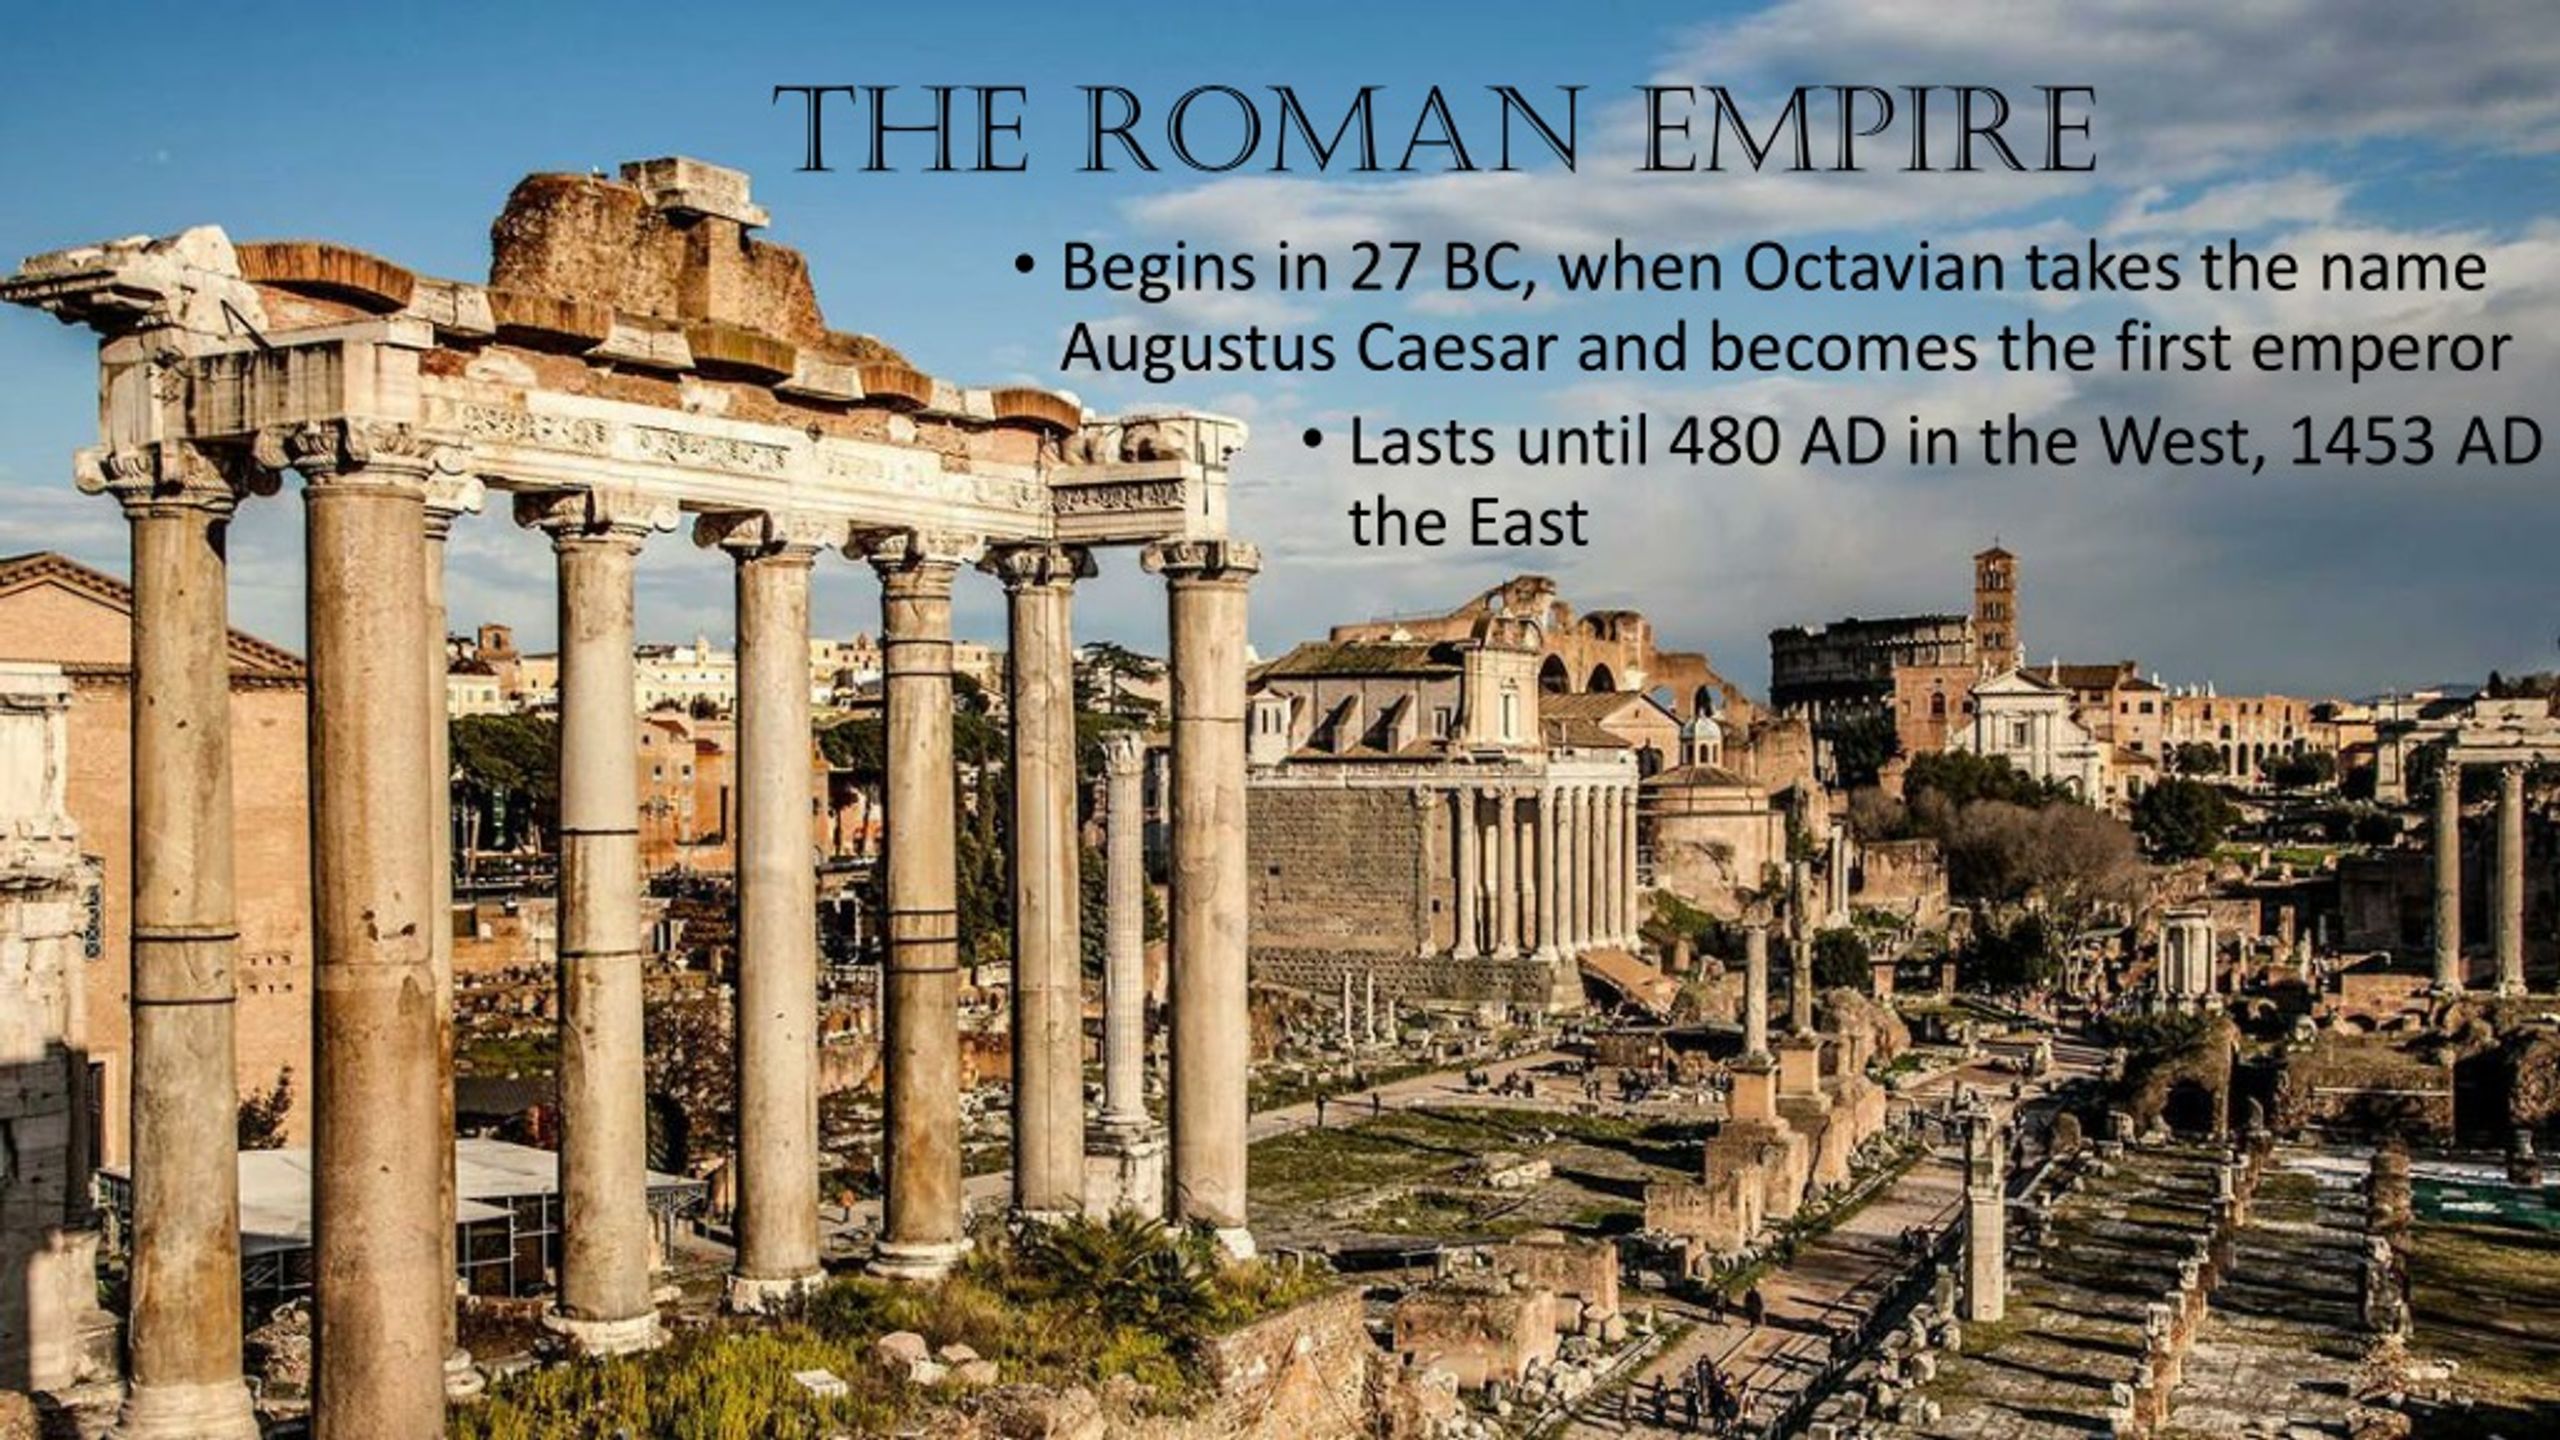 Roman Empire Free for mac instal